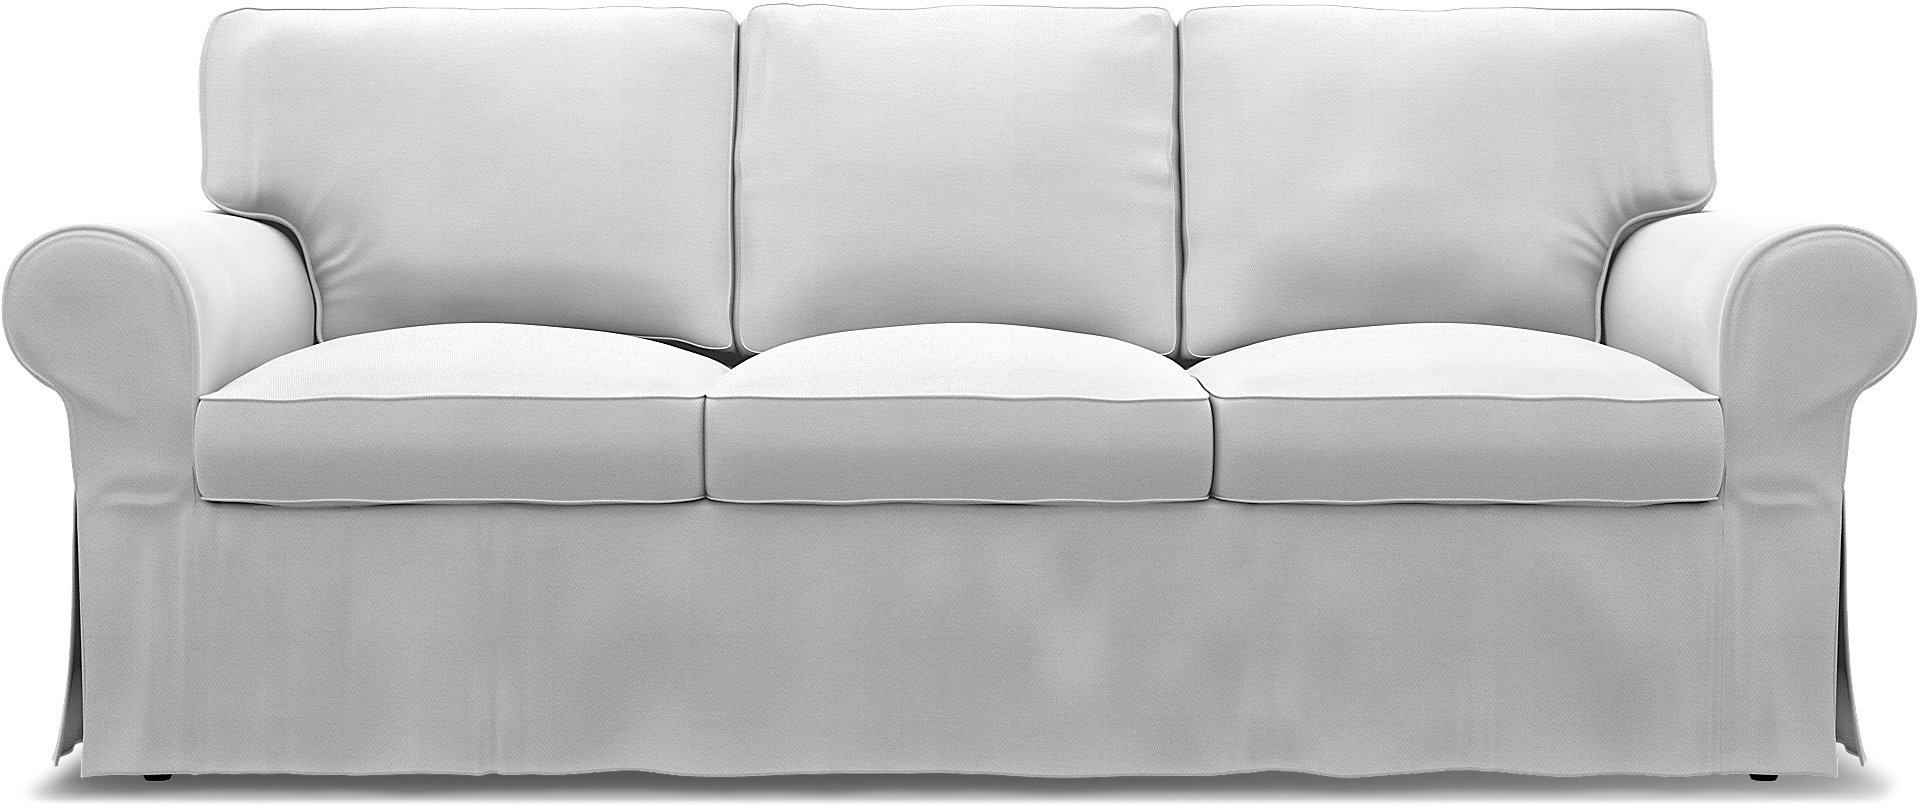 Three-seat Sofa Cover Custom Made Cover Fits IKEA Vimle Sofa Replace Cover 